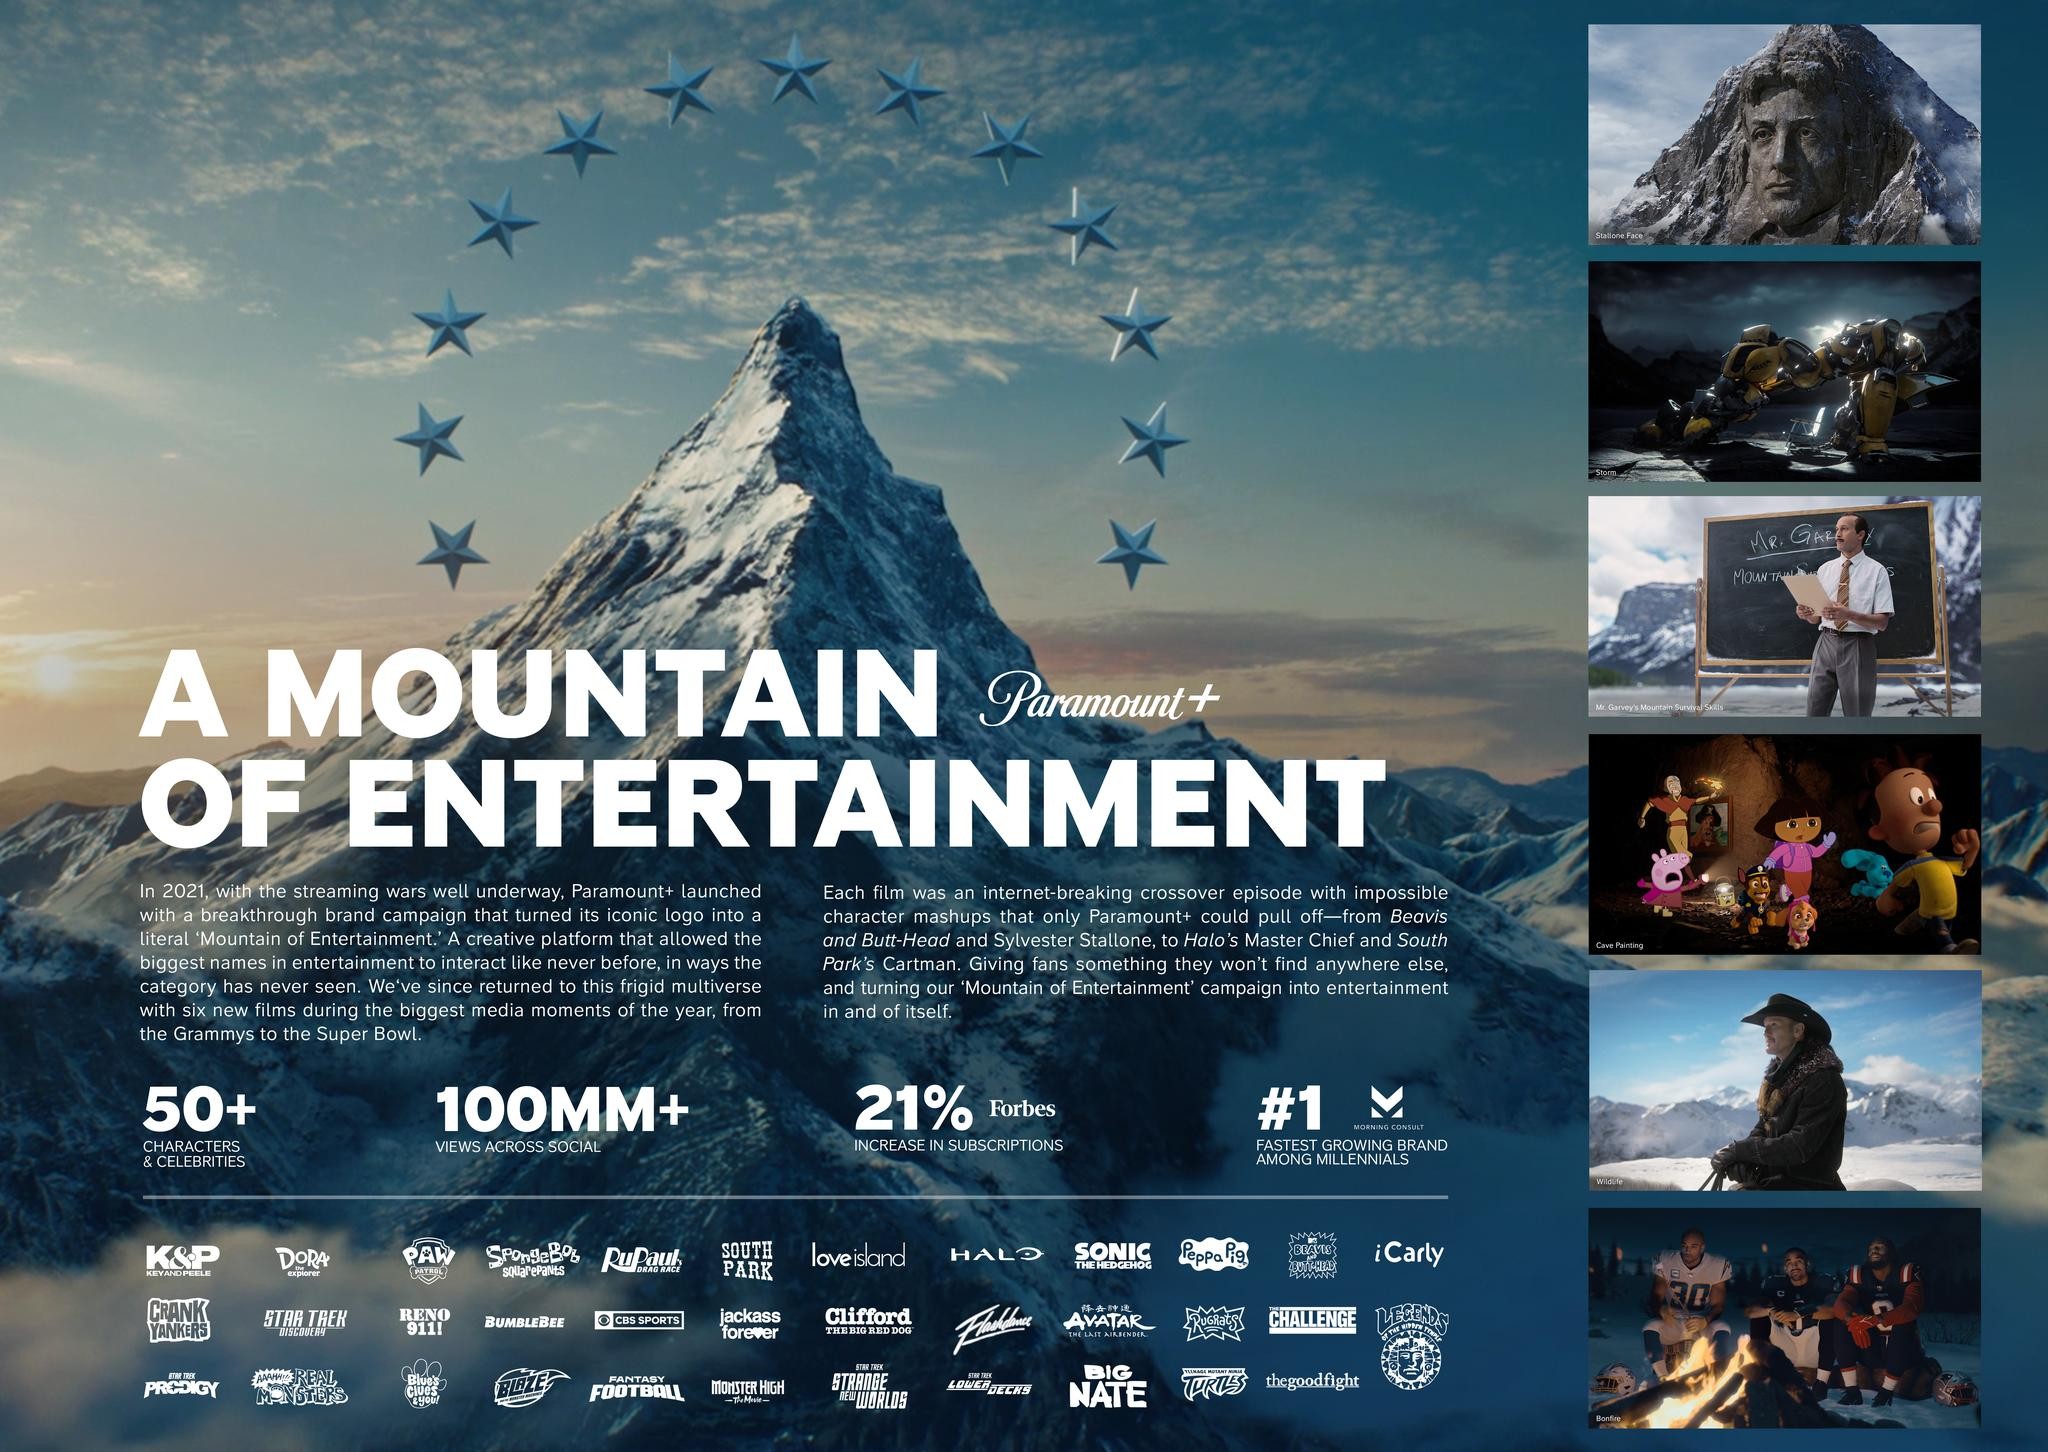 Paramount+ - A Mountain of Entertainment